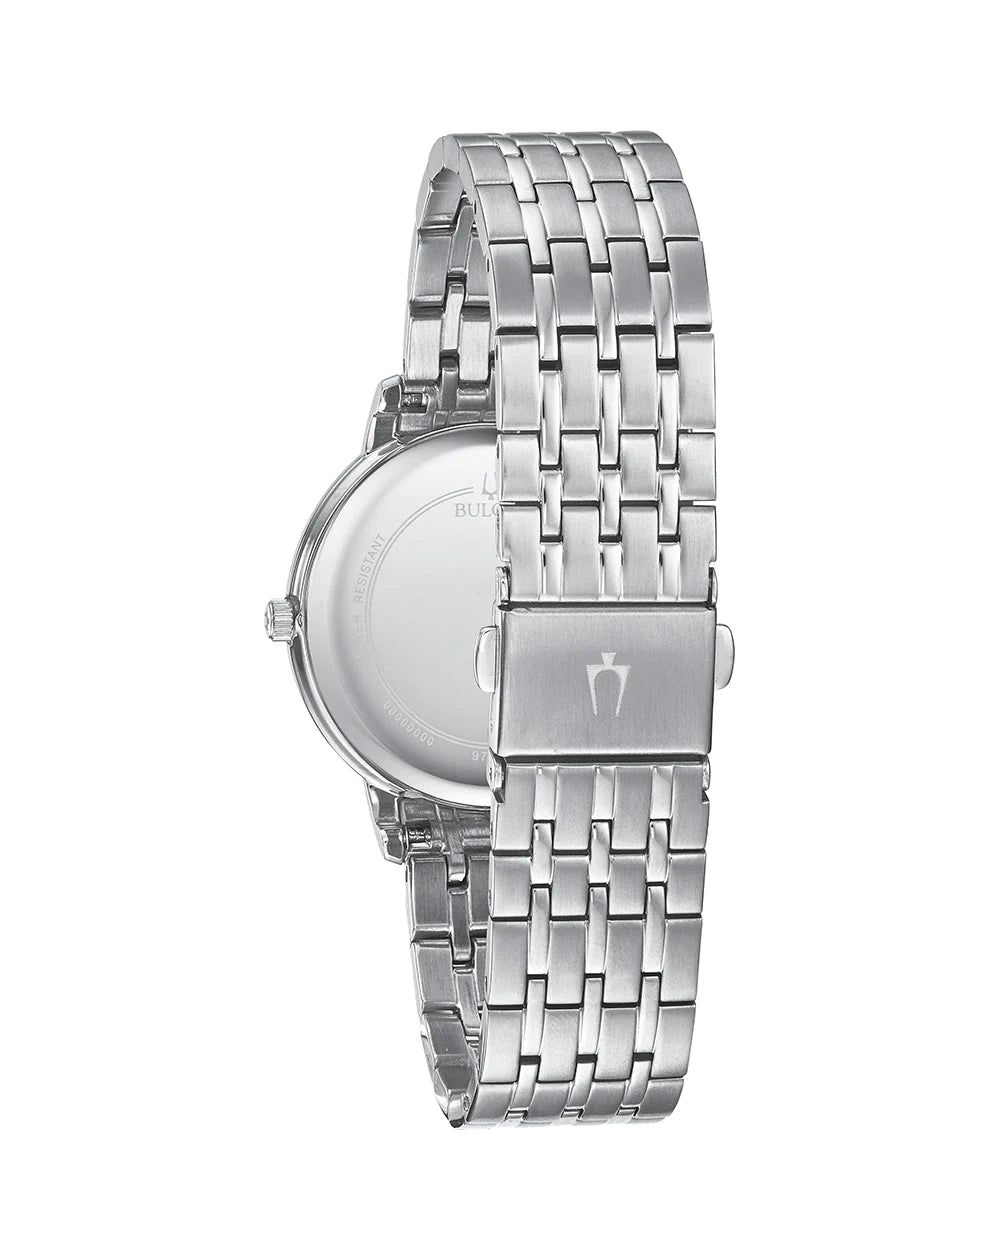 Bulova Women's Classic Diamond Watch 96P207